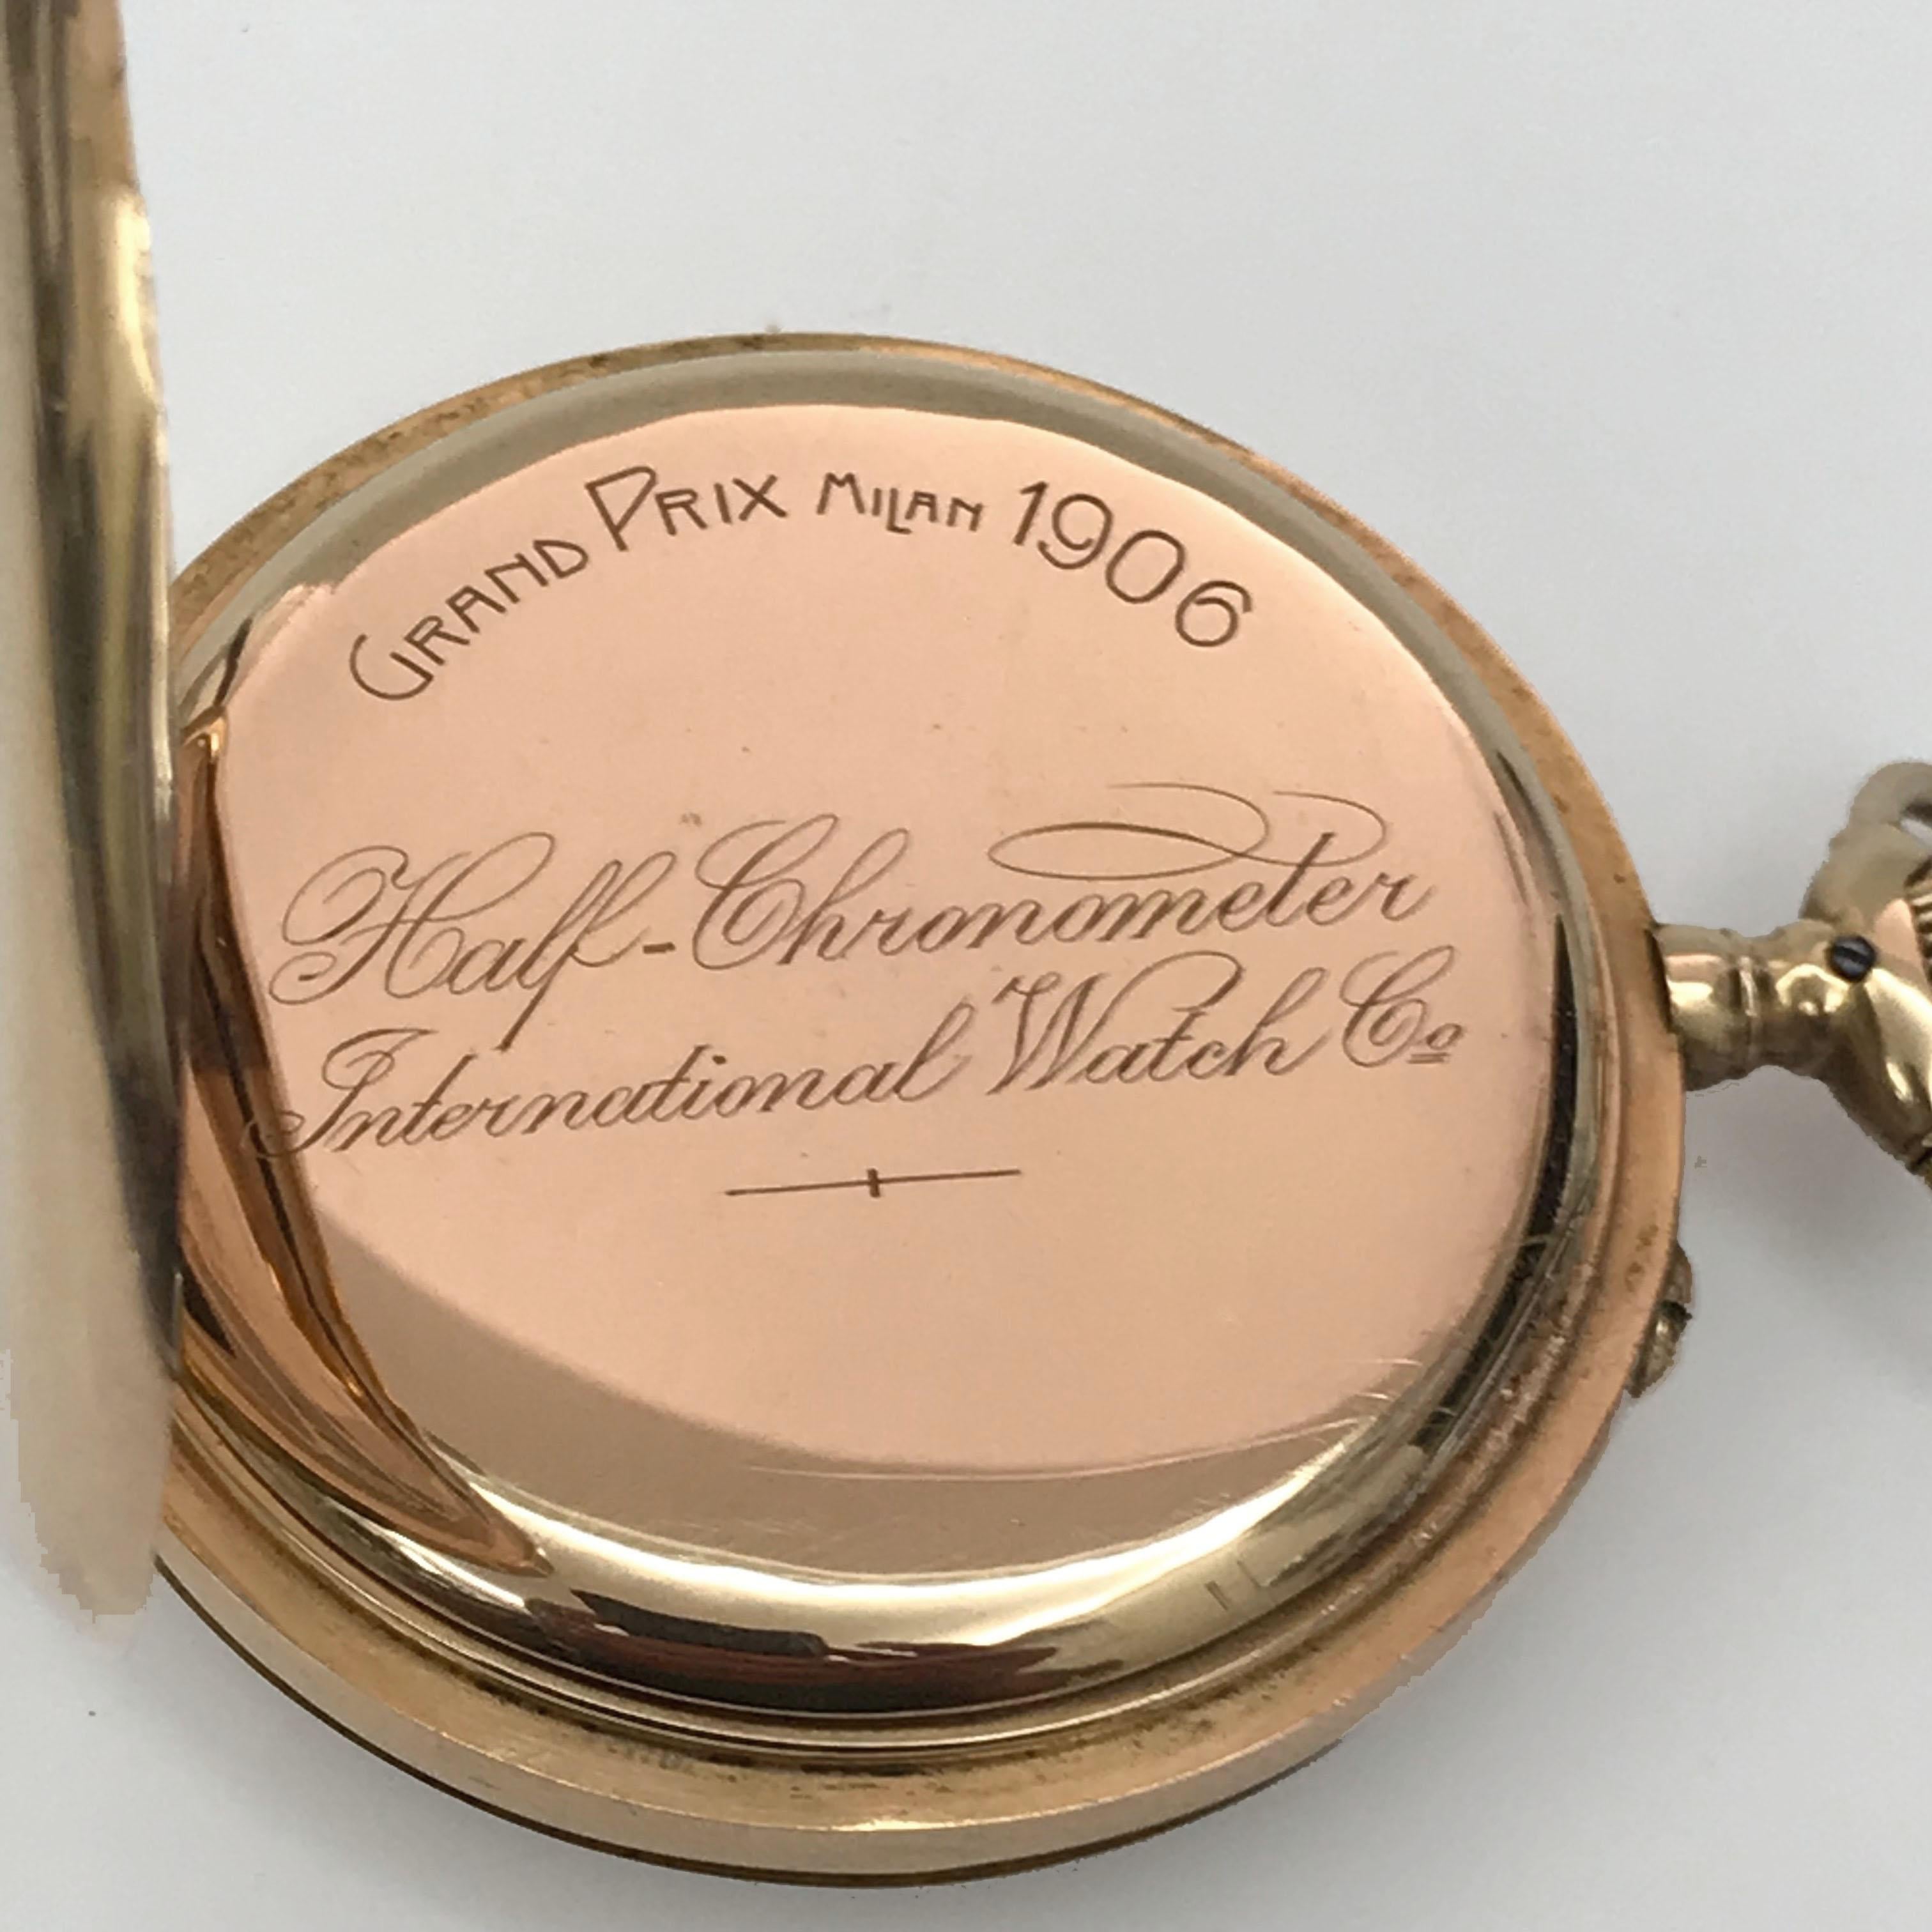  IWC International Watch & Co pocket watch in 18 karat gold. 1910s Swiss Made 5